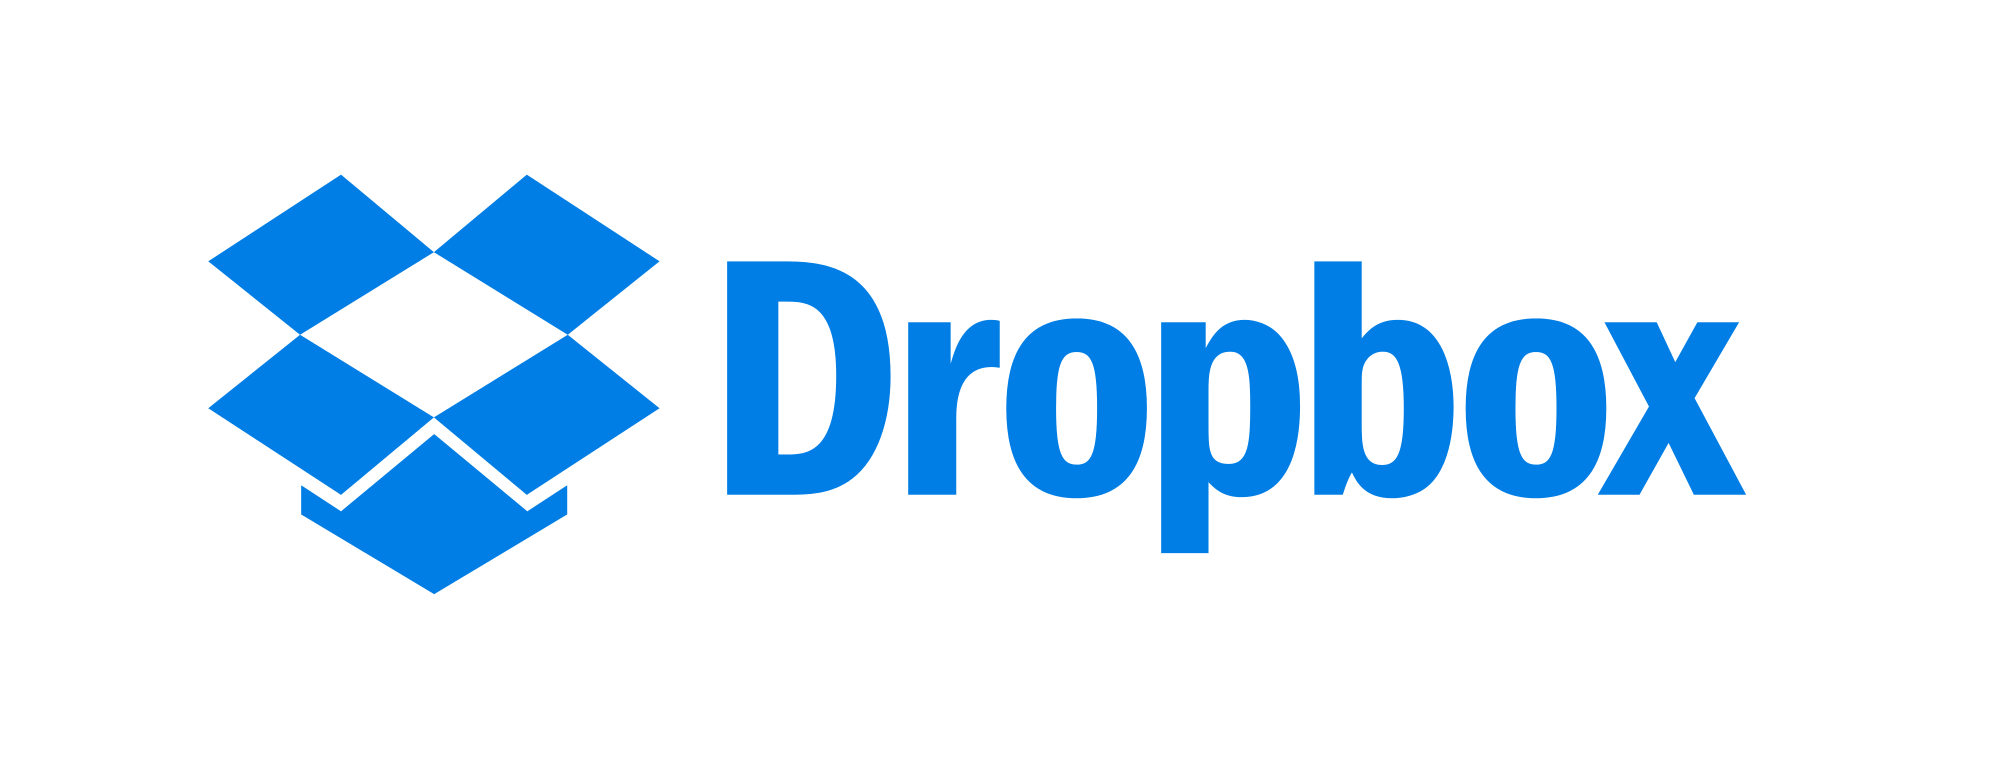 logo-dropbox.png